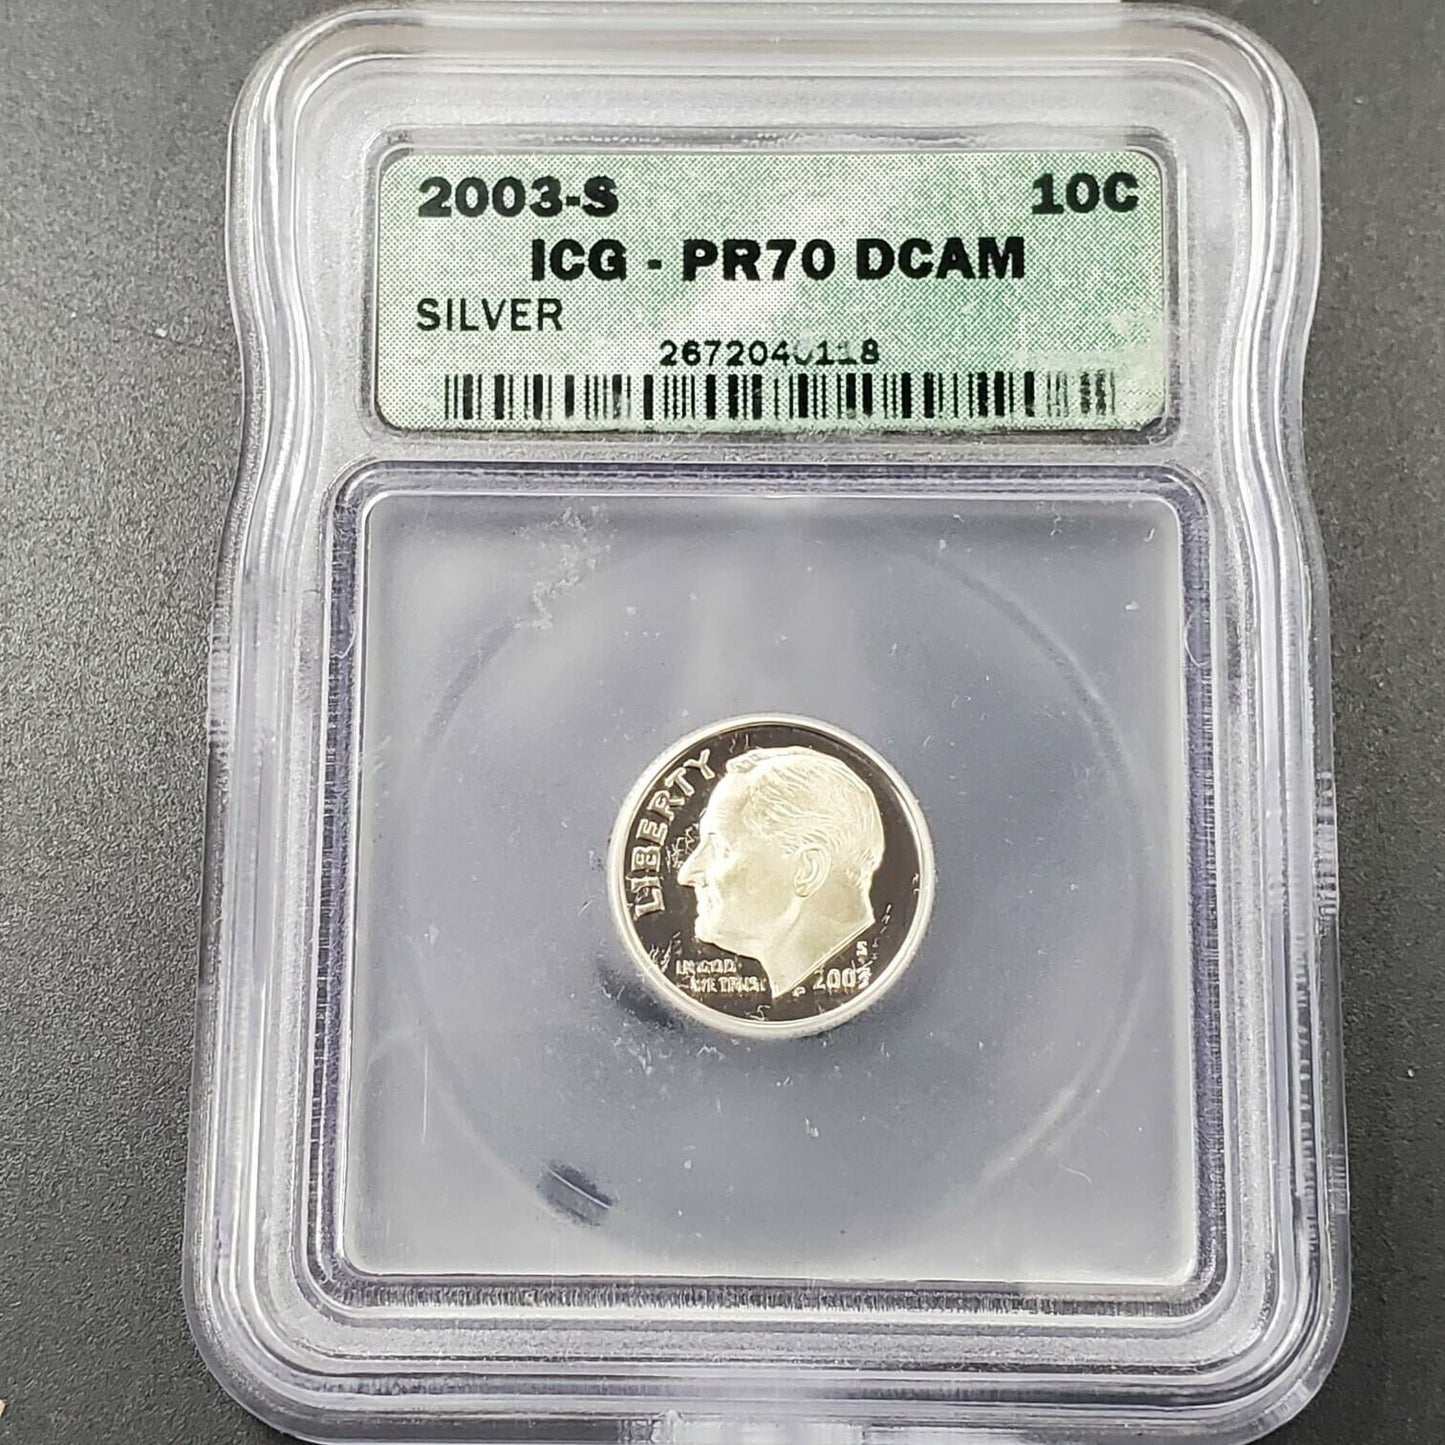 2003 s Roosevelt Proof silver Dime Coin Retro ICG PR70 DCAM Deep Cameo Old Slab